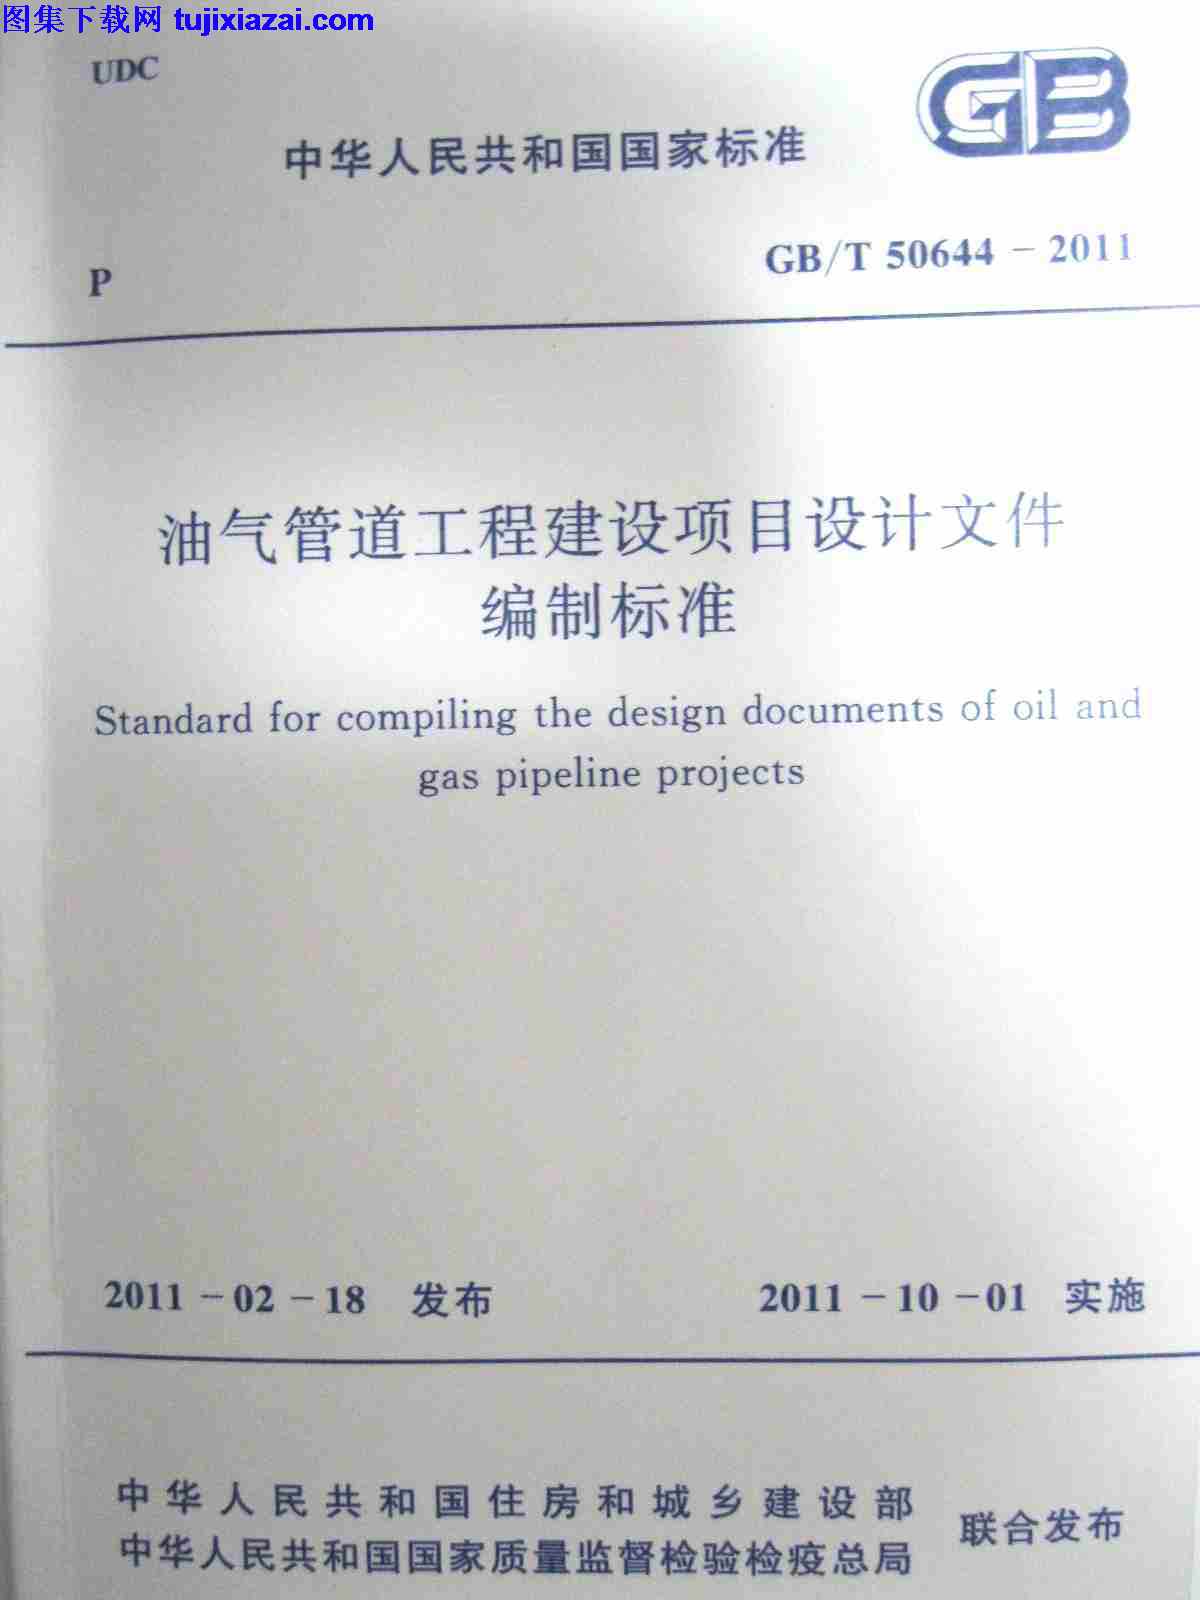 GBT50644-2011,油气管道工程建设项目设计文件编制标准,油气管道工程建设项目设计文件编制标准_设计规范,设计规范,GBT50644-2011_油气管道工程建设项目设计文件编制标准_设计规范.pdf